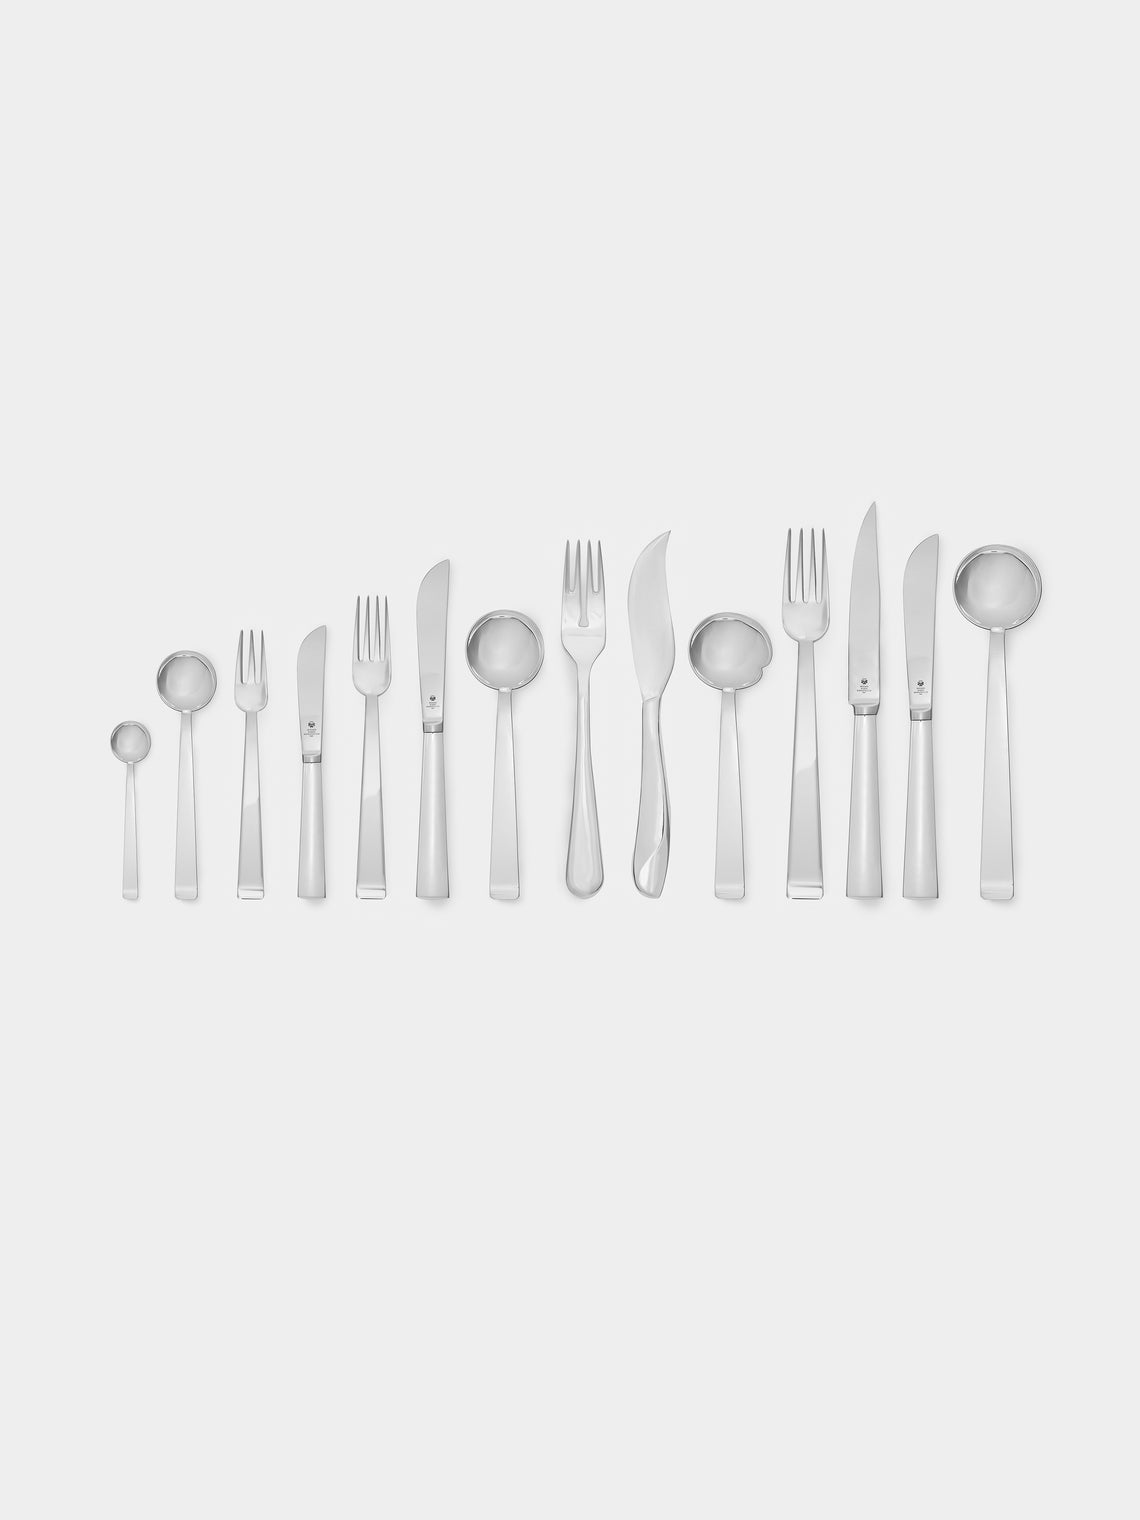 Wiener Silber Manufactur - Josef Hoffmann 135 Silver-Plated Dessert Knife -  - ABASK